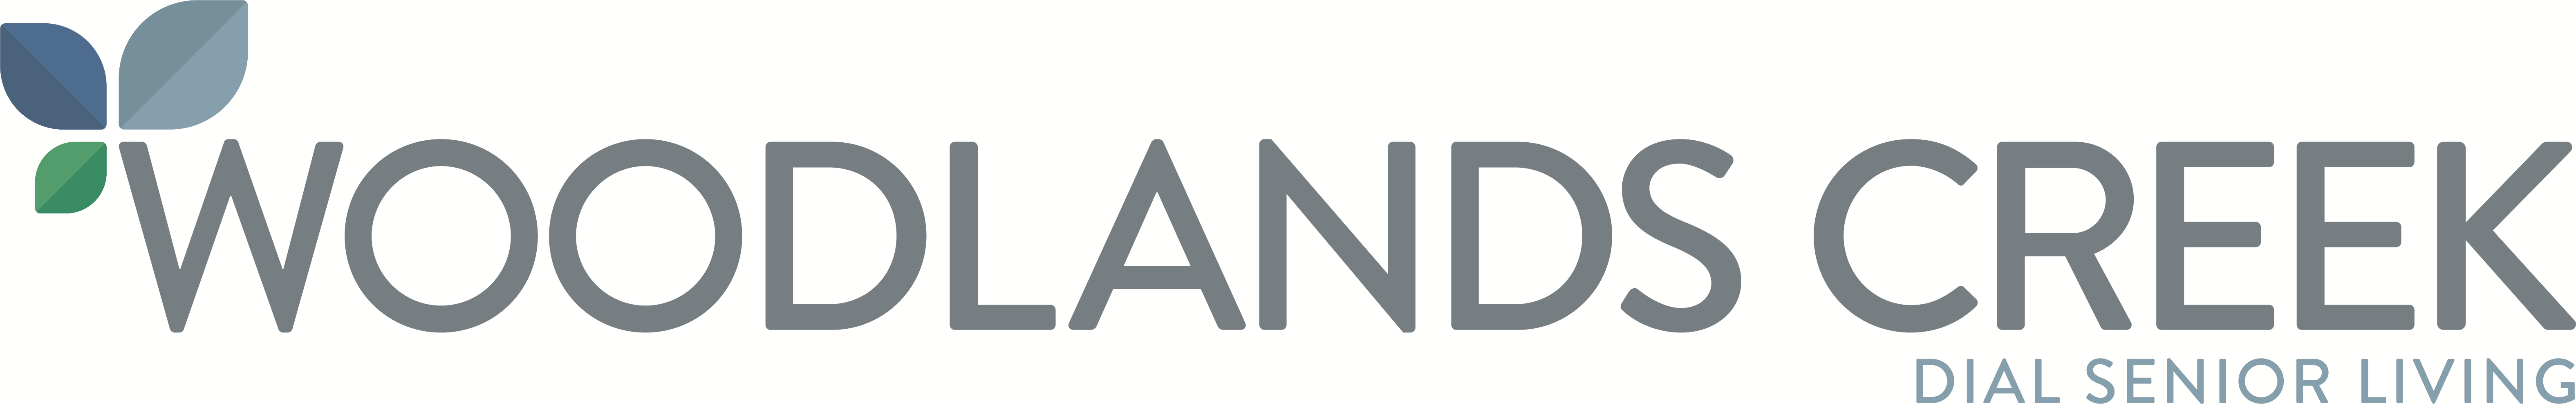 Woodlands Creek logo